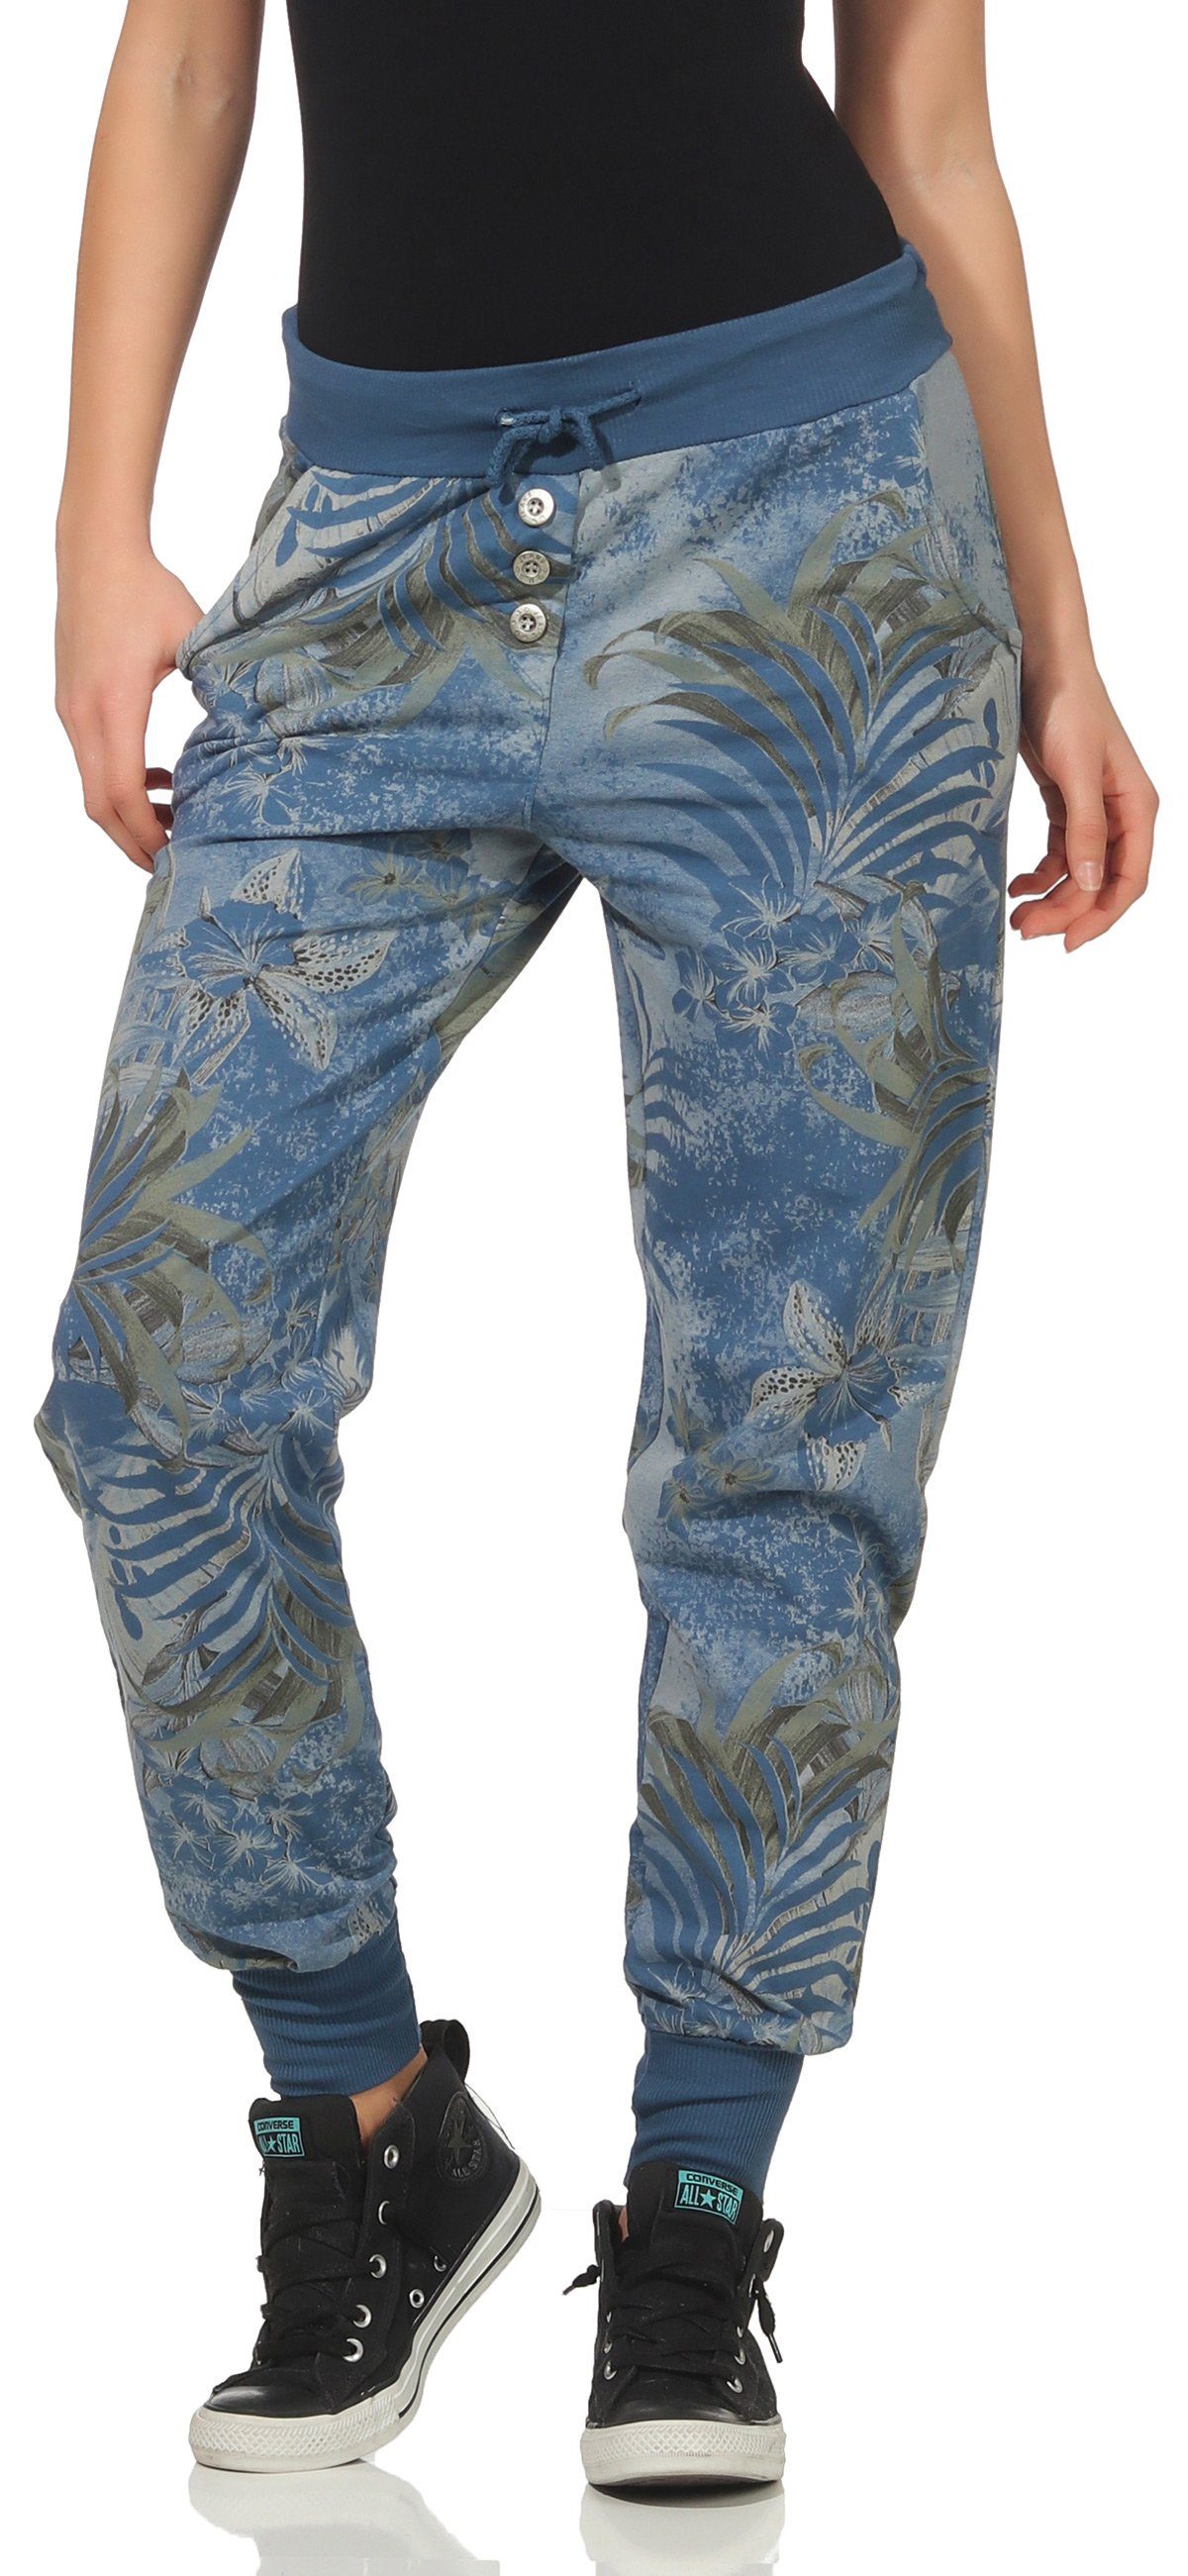 malito more than fashion Jogginghose 83728 Sweatpants mit Jungelprint jeansblau